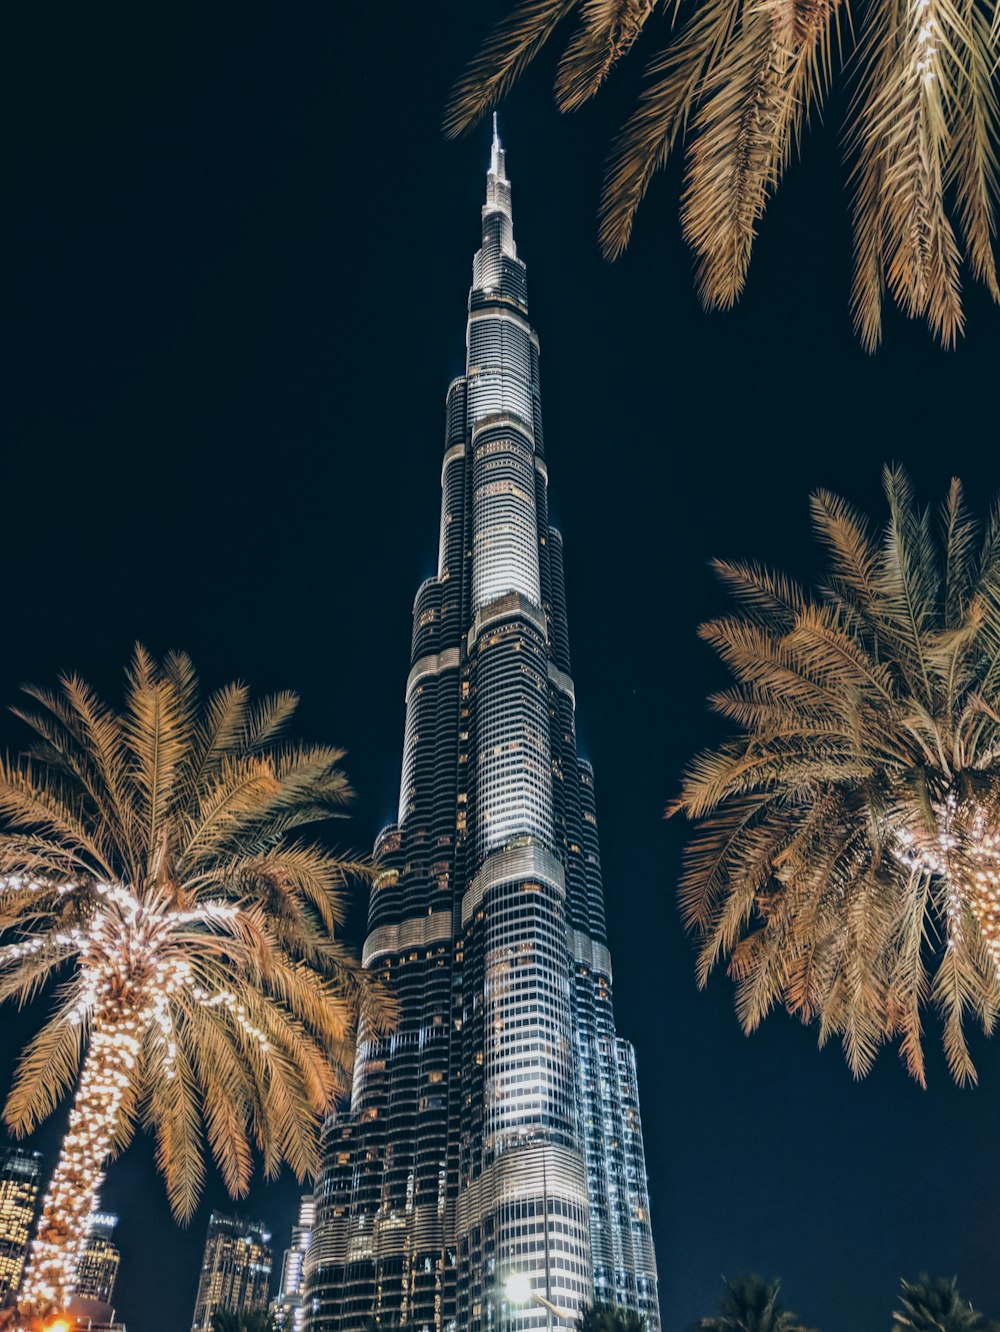 Burj Khalifa의 낮은 각도 사진